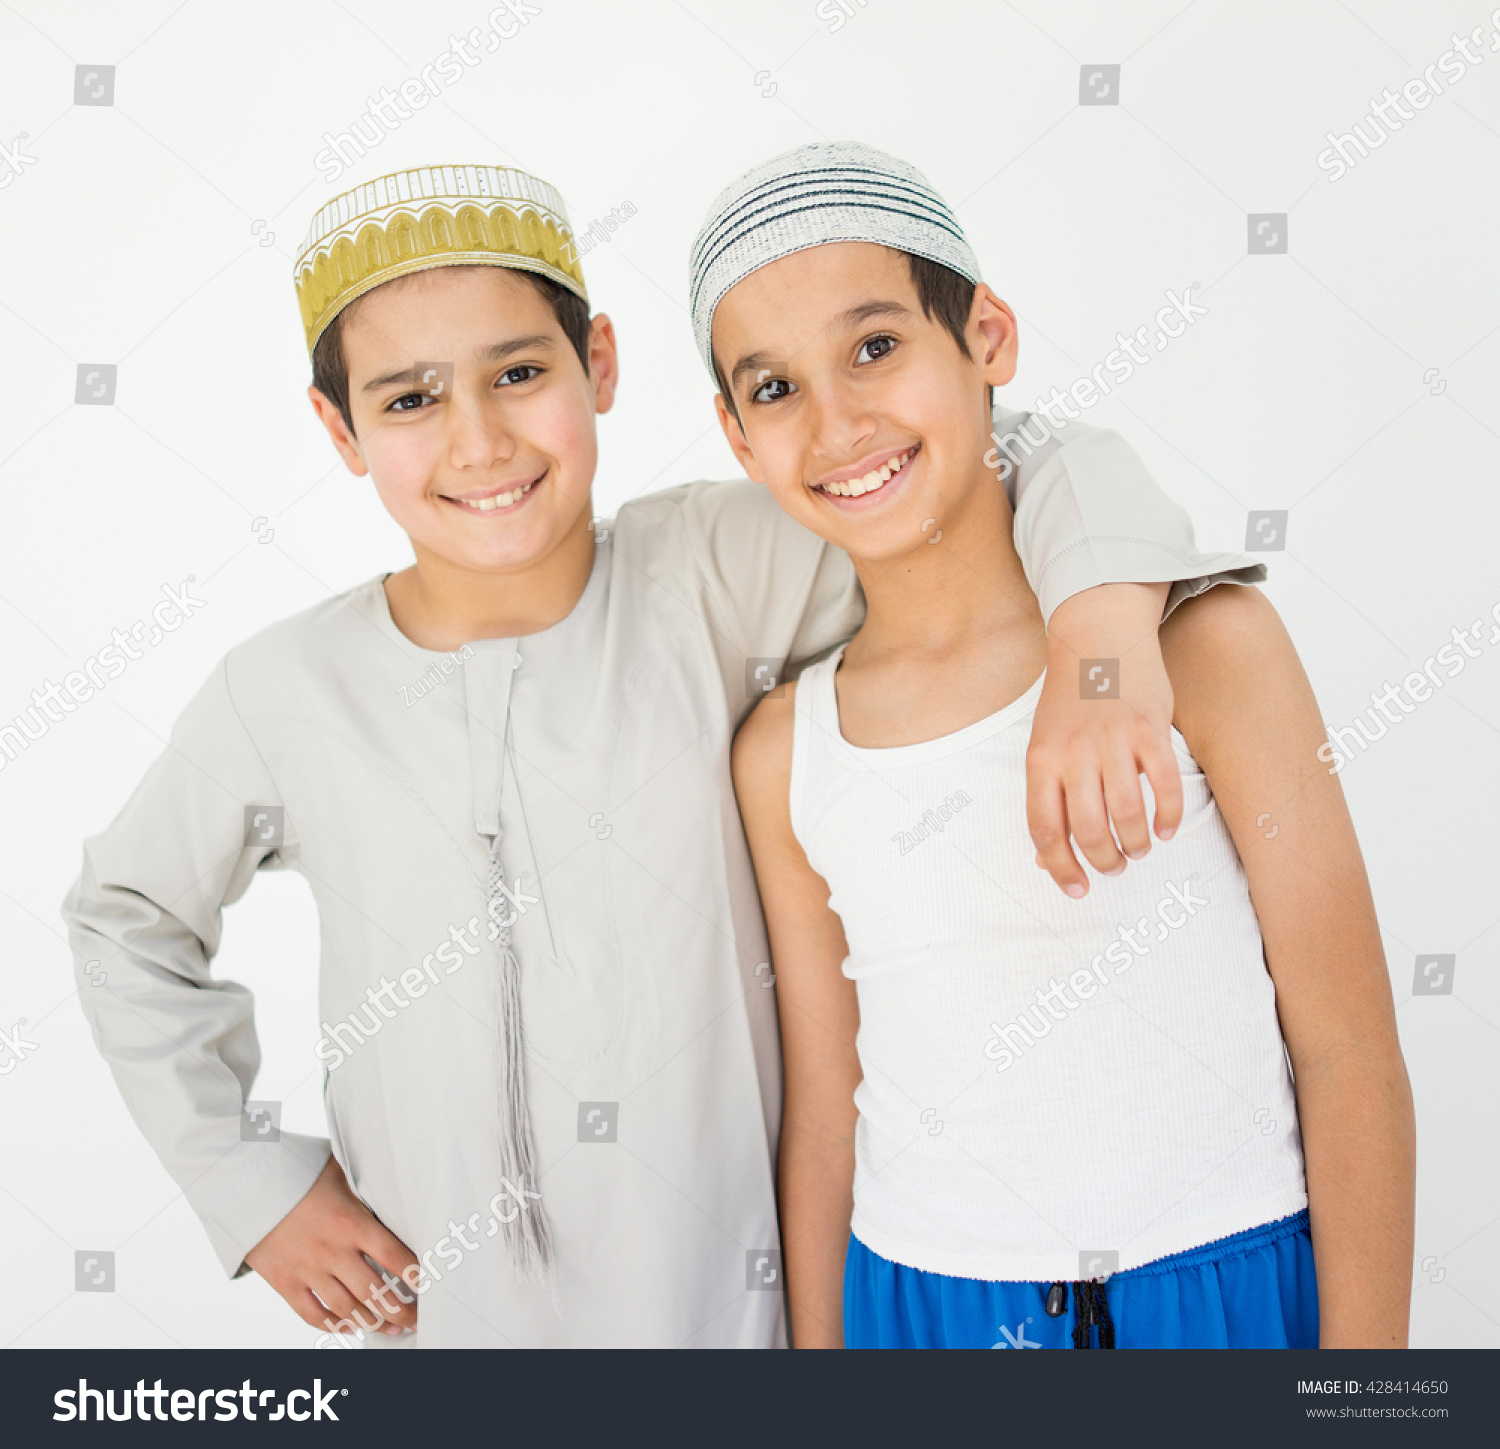 Happy Arab Boys Stock Photo (Royalty Free) 428414650 - Shutterstock